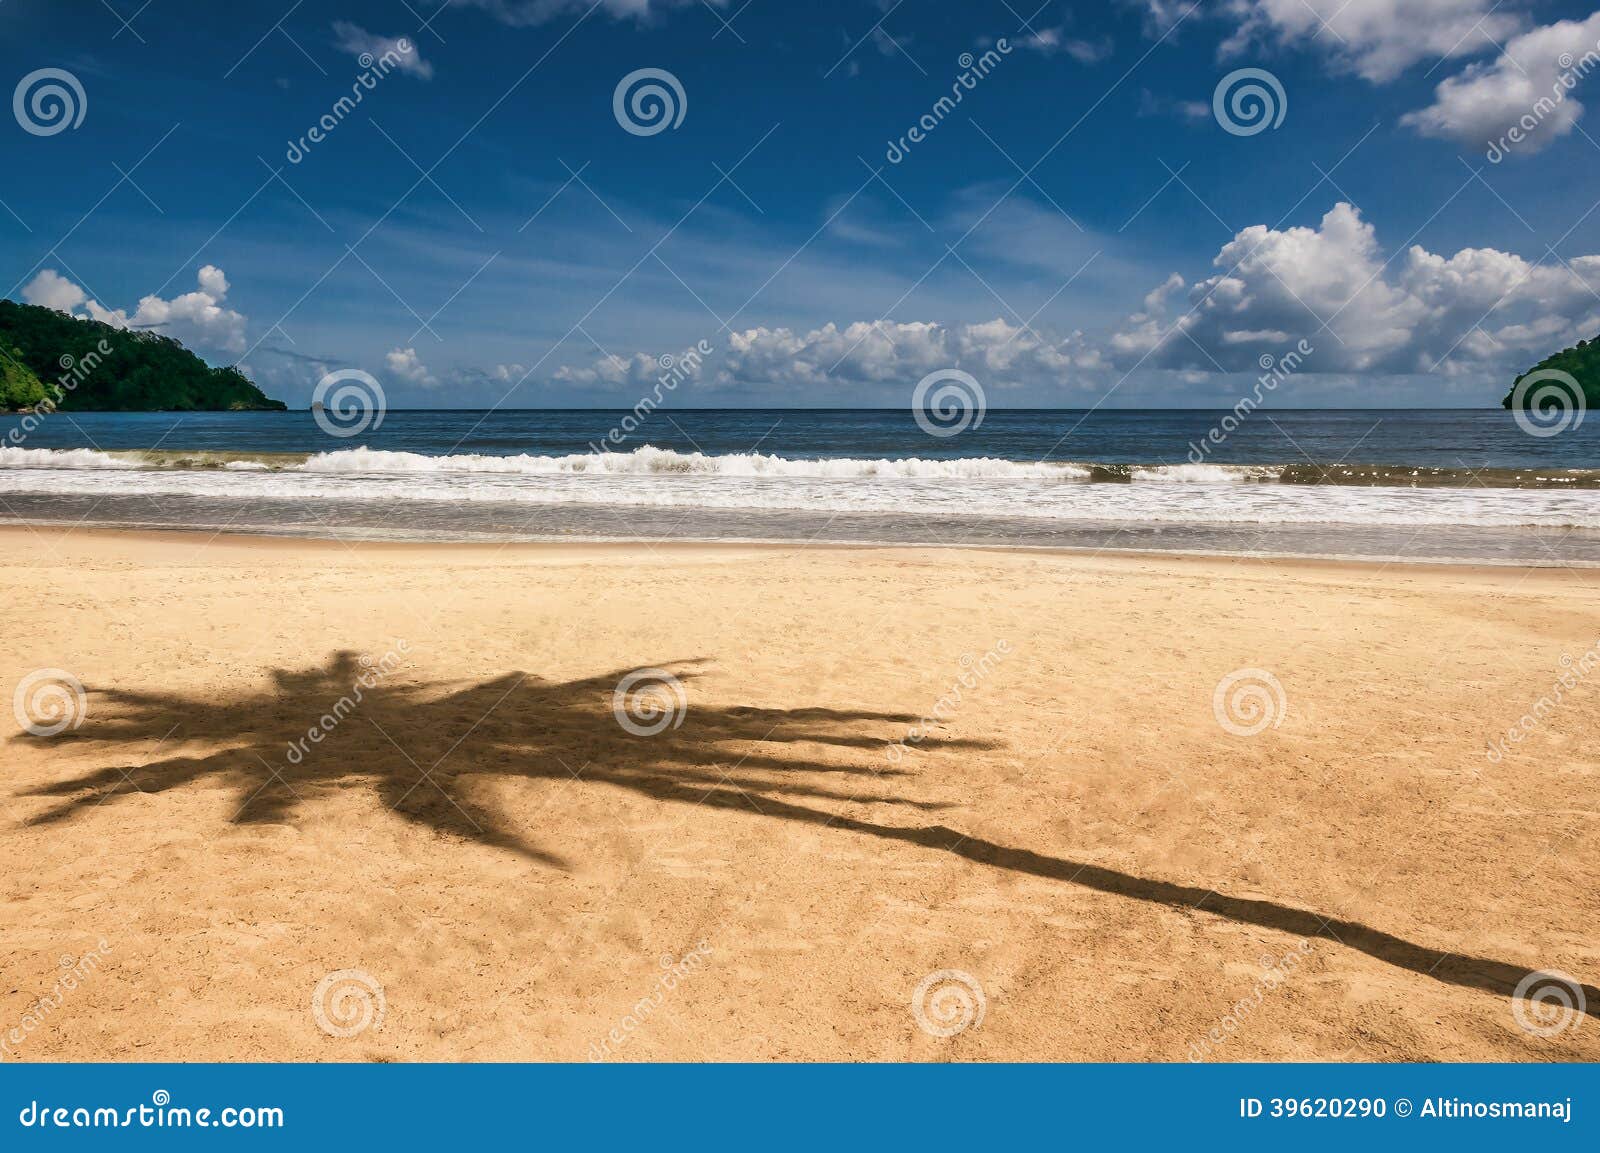 maracas bay trinidad and tobago beach palm tree shadow caribbean